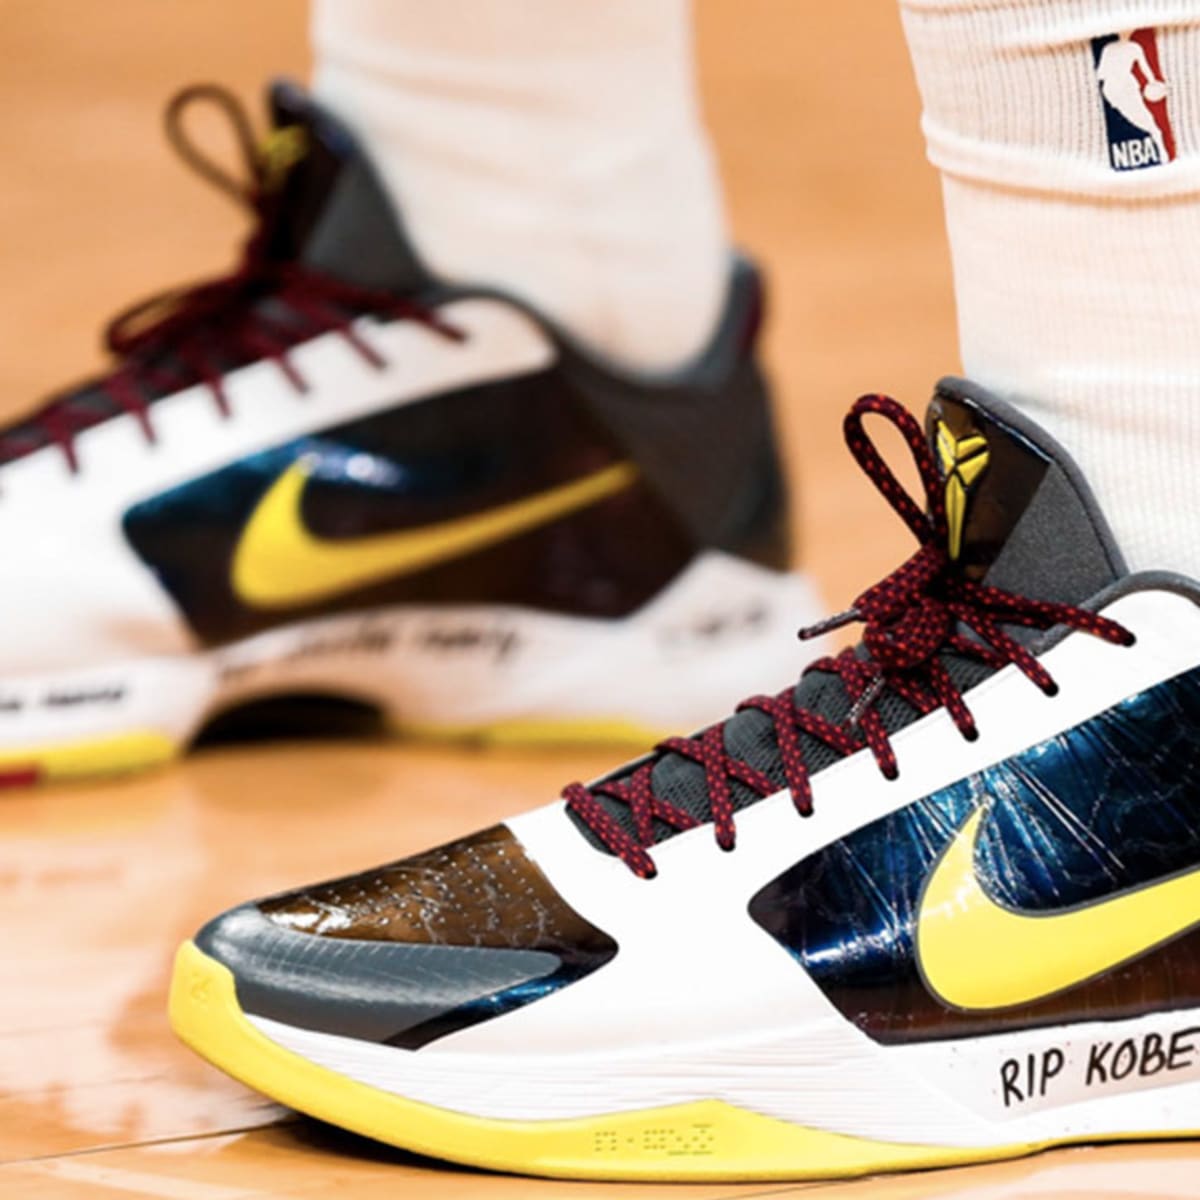 NBA stars write Kobe Bryant's name on their sneakers in emotional